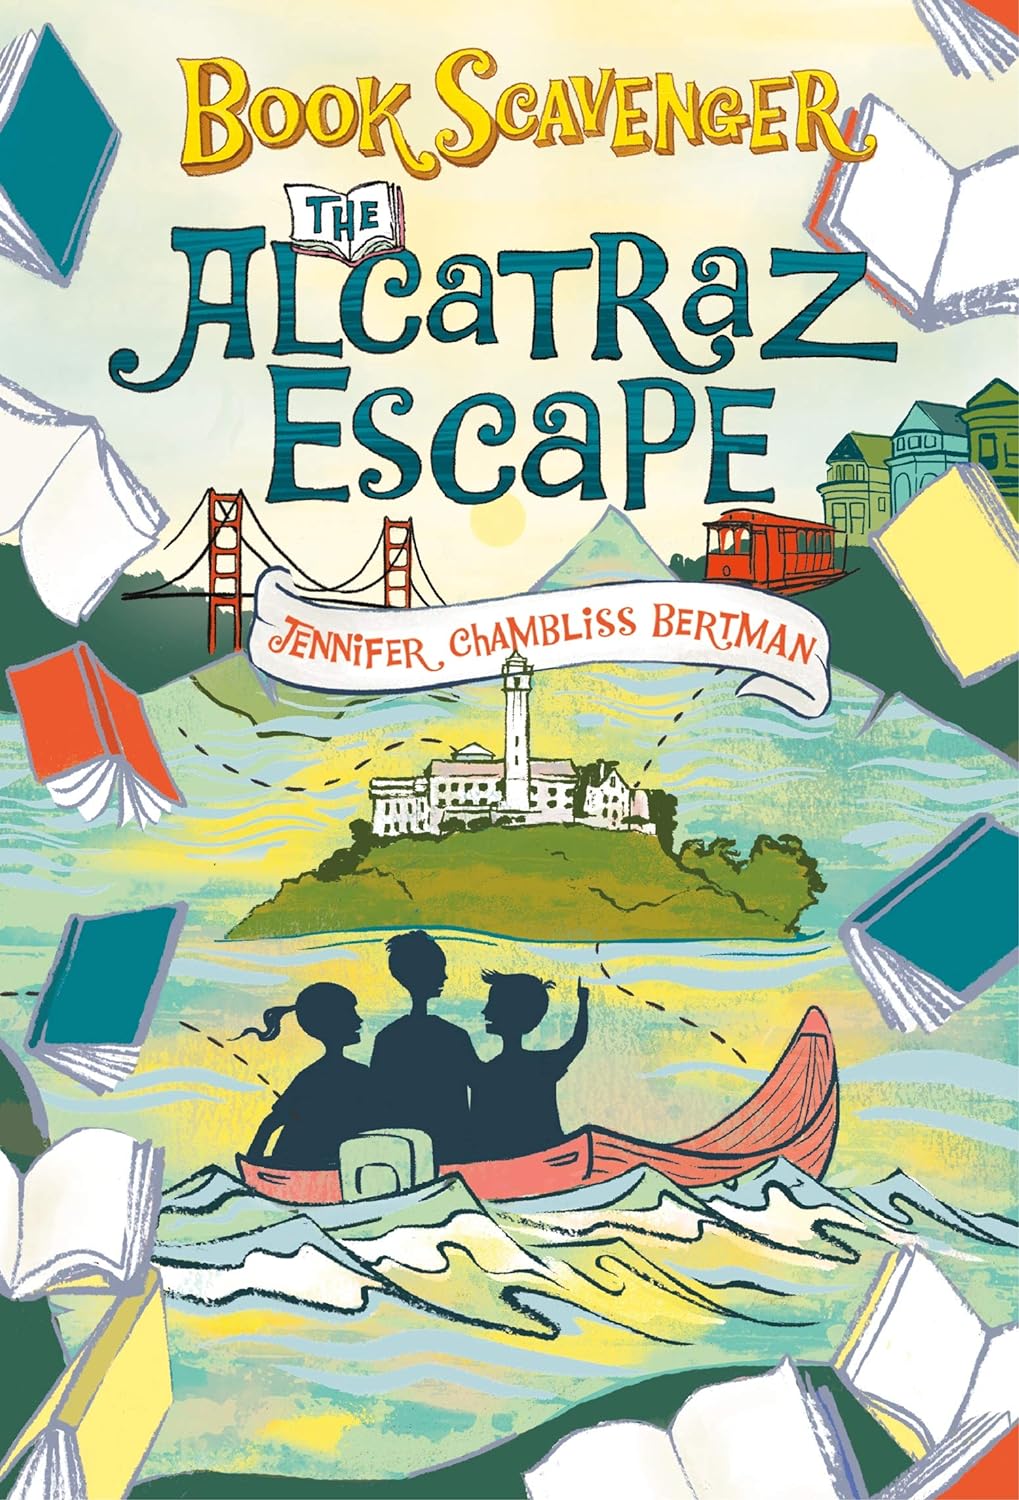 alcatraz escape (book scavenger #3)